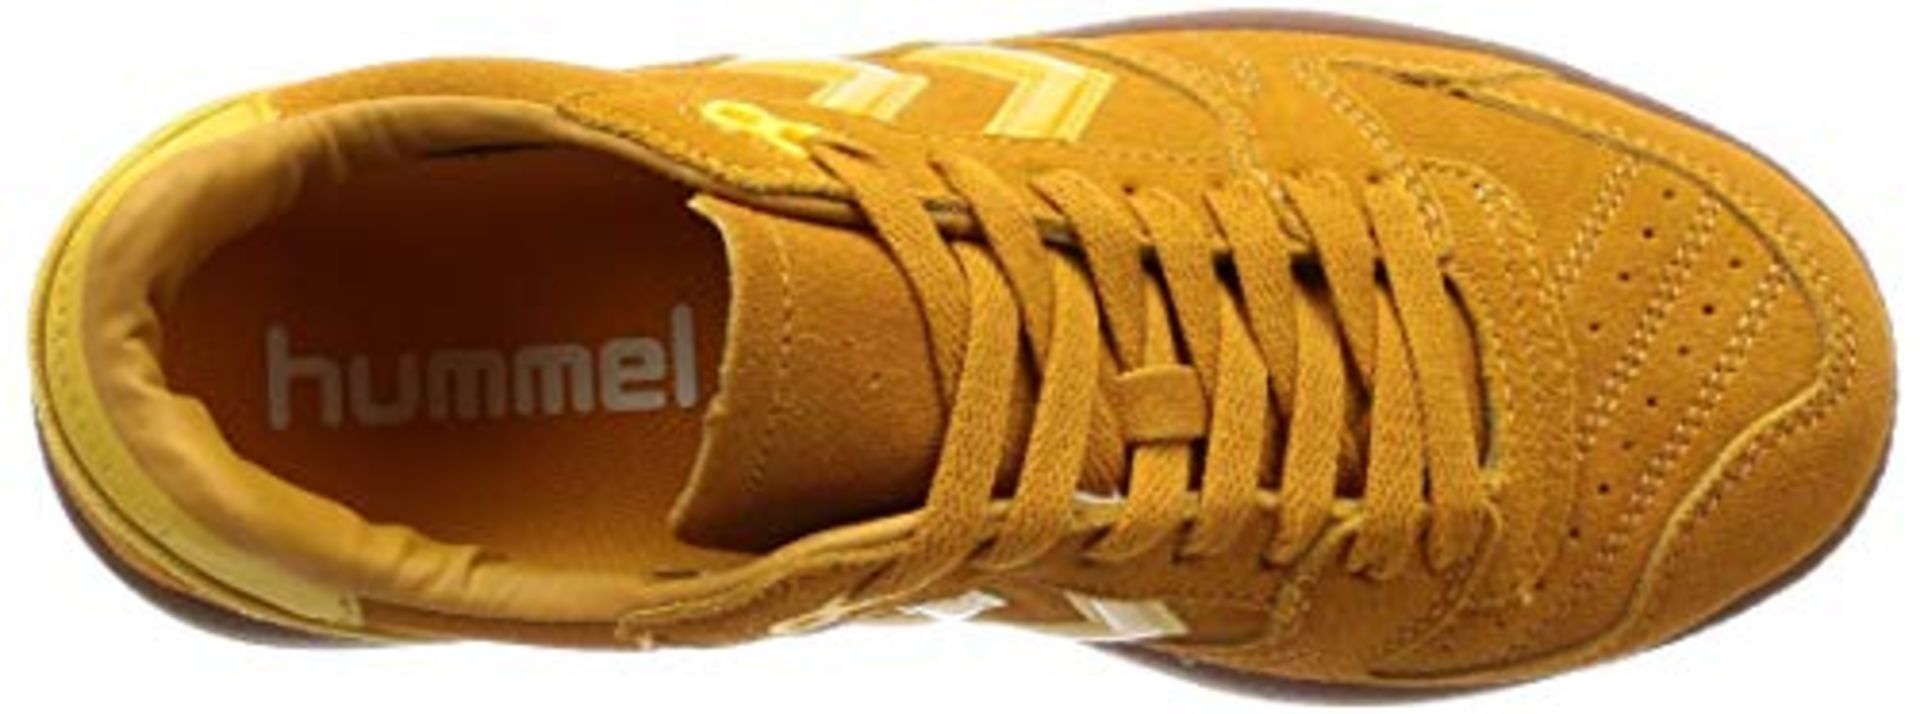 1 x Hummel Team Shoes Yellow HB, HM201937, Sunflower, 41 (EU) Size: 41 EU | EAN: 5700494865813 - Image 6 of 8